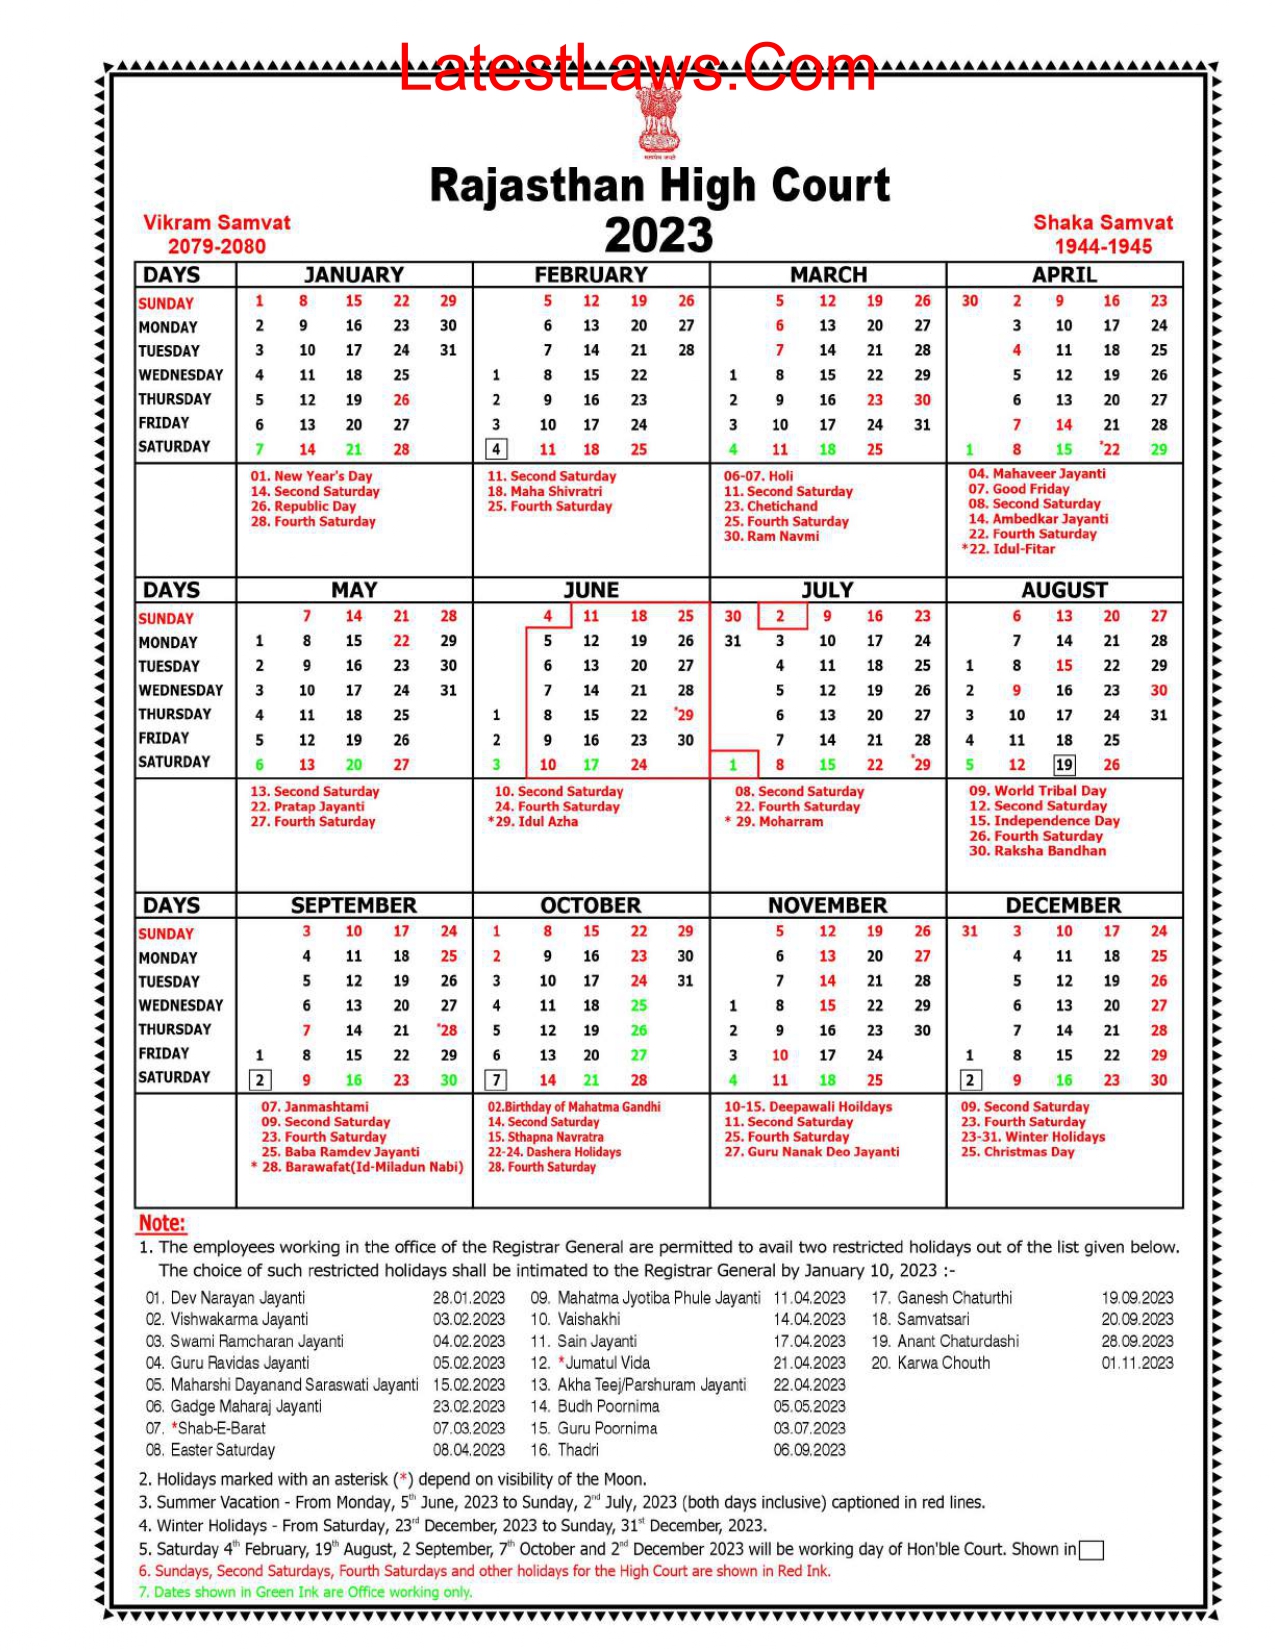 Rajasthan High Court Calendar, 2023